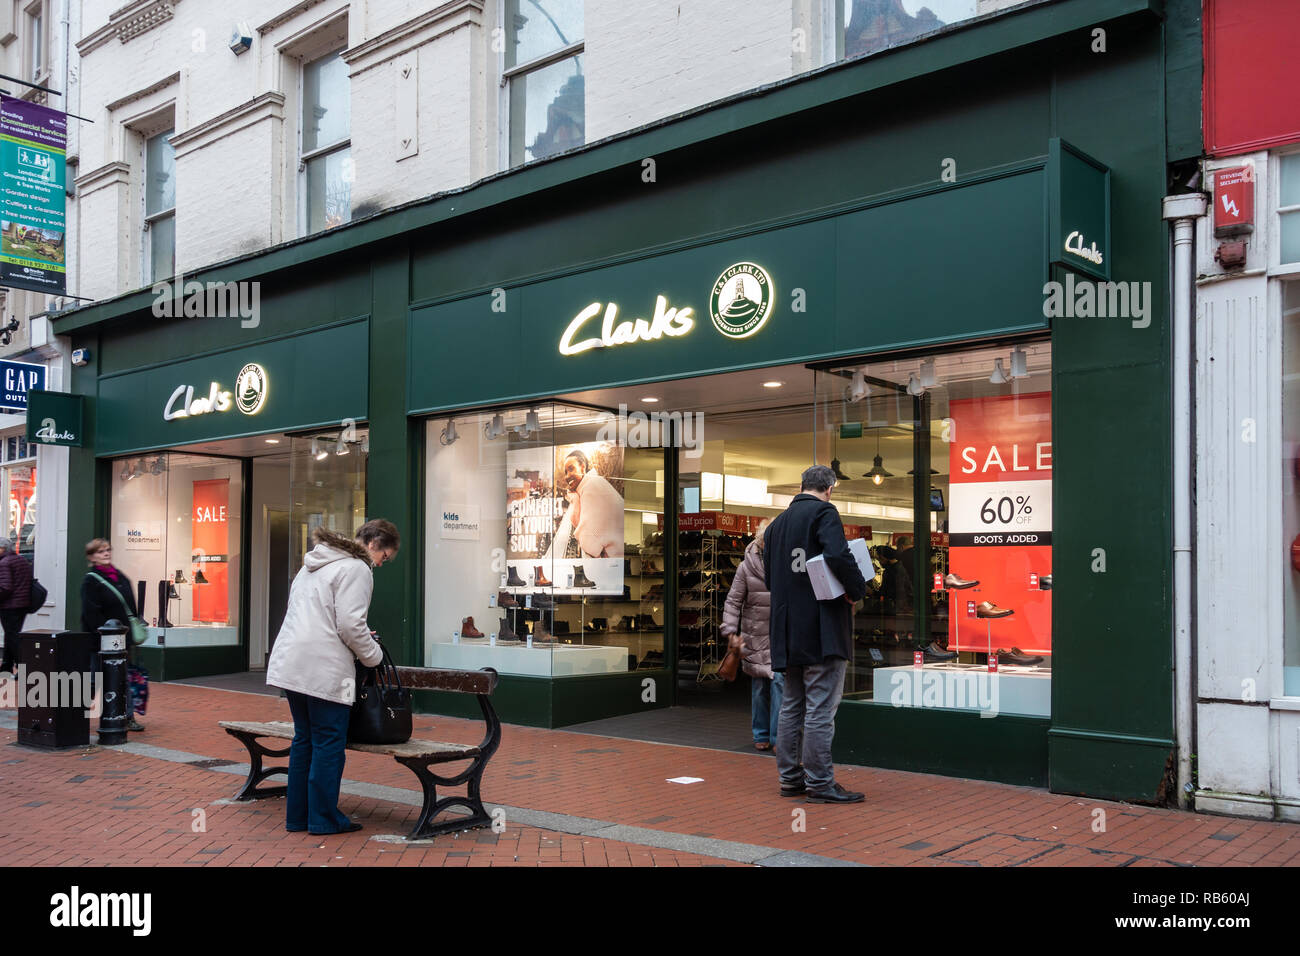 The Clarks shoe shop on Broad Street, Reading, Berkshire, UK Stock Photo -  Alamy